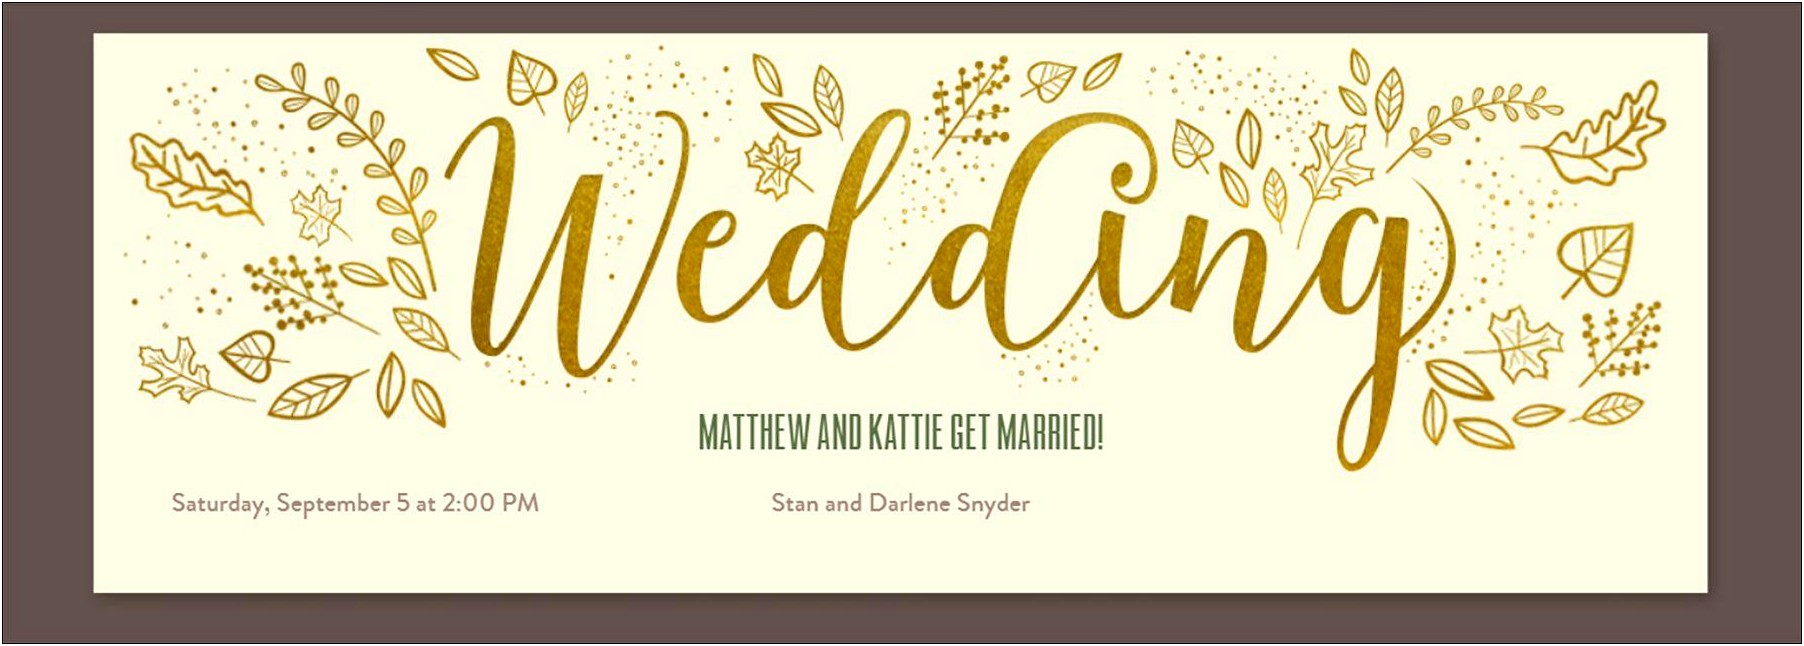 Online Invitation Card For Wedding Free